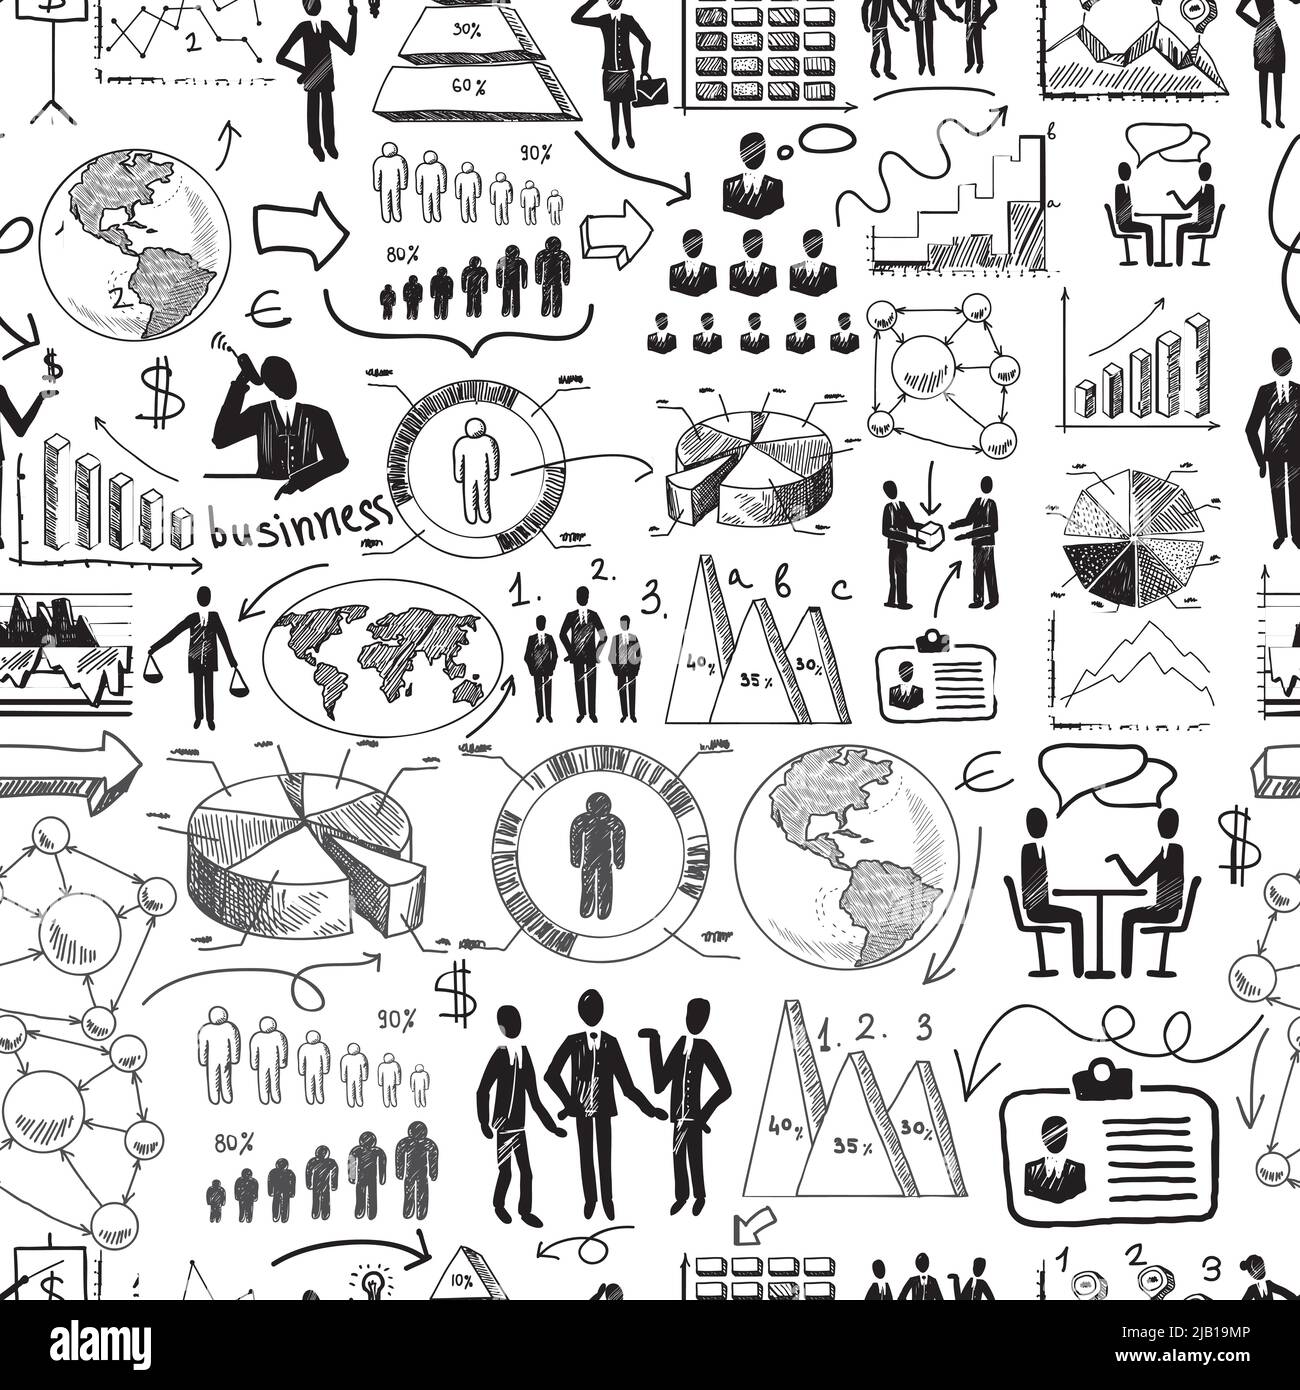 Sketch business organization management process seamless pattern doodle vector illustration Stock Vector